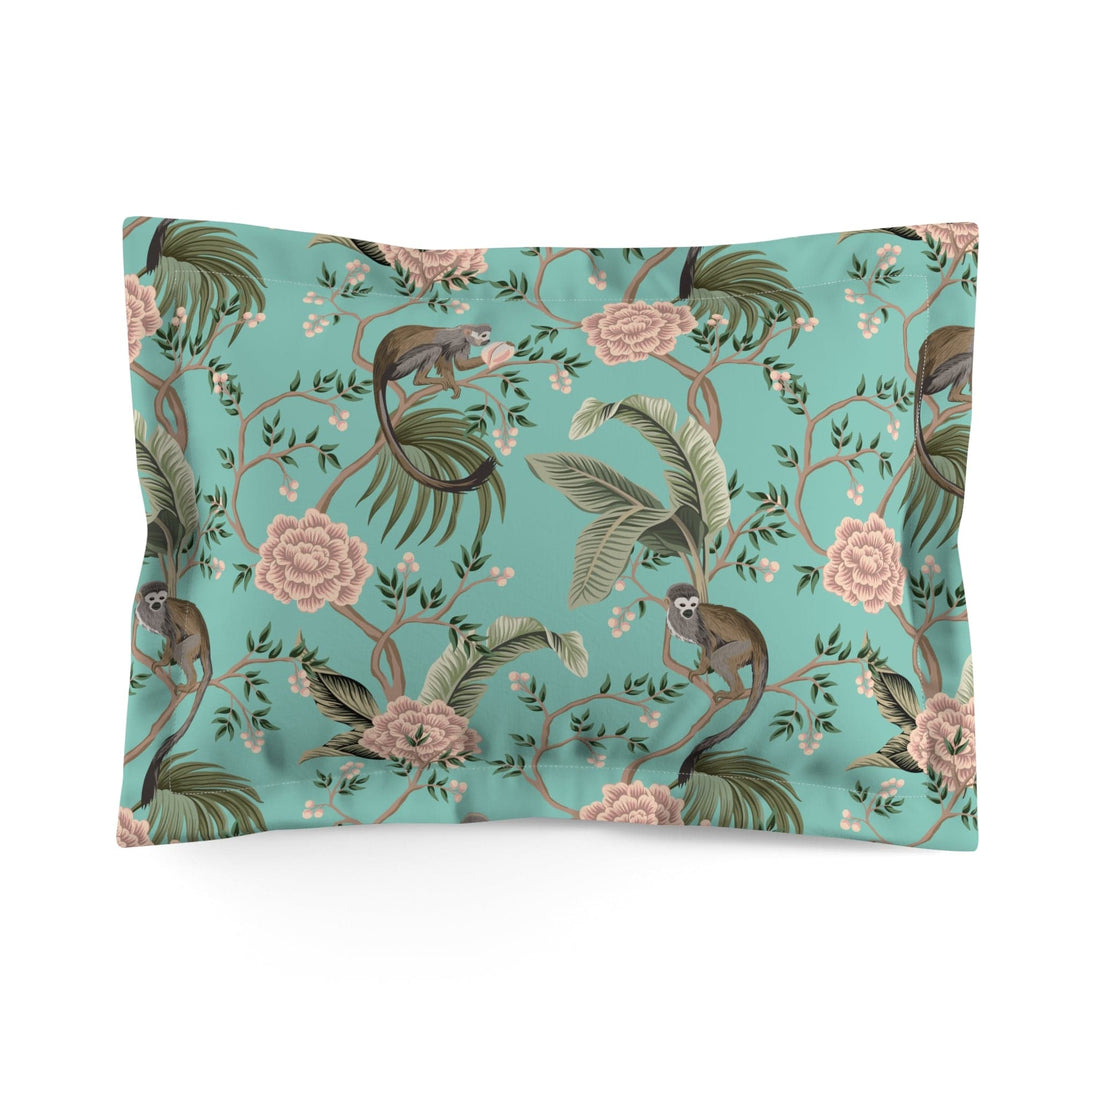 Kate McEnroe New York Chinoiserie Monkey Floral Pillow Sham, Teal Pink Botanical Toile Bedding Pillow Shams Standard 12407340905099844920